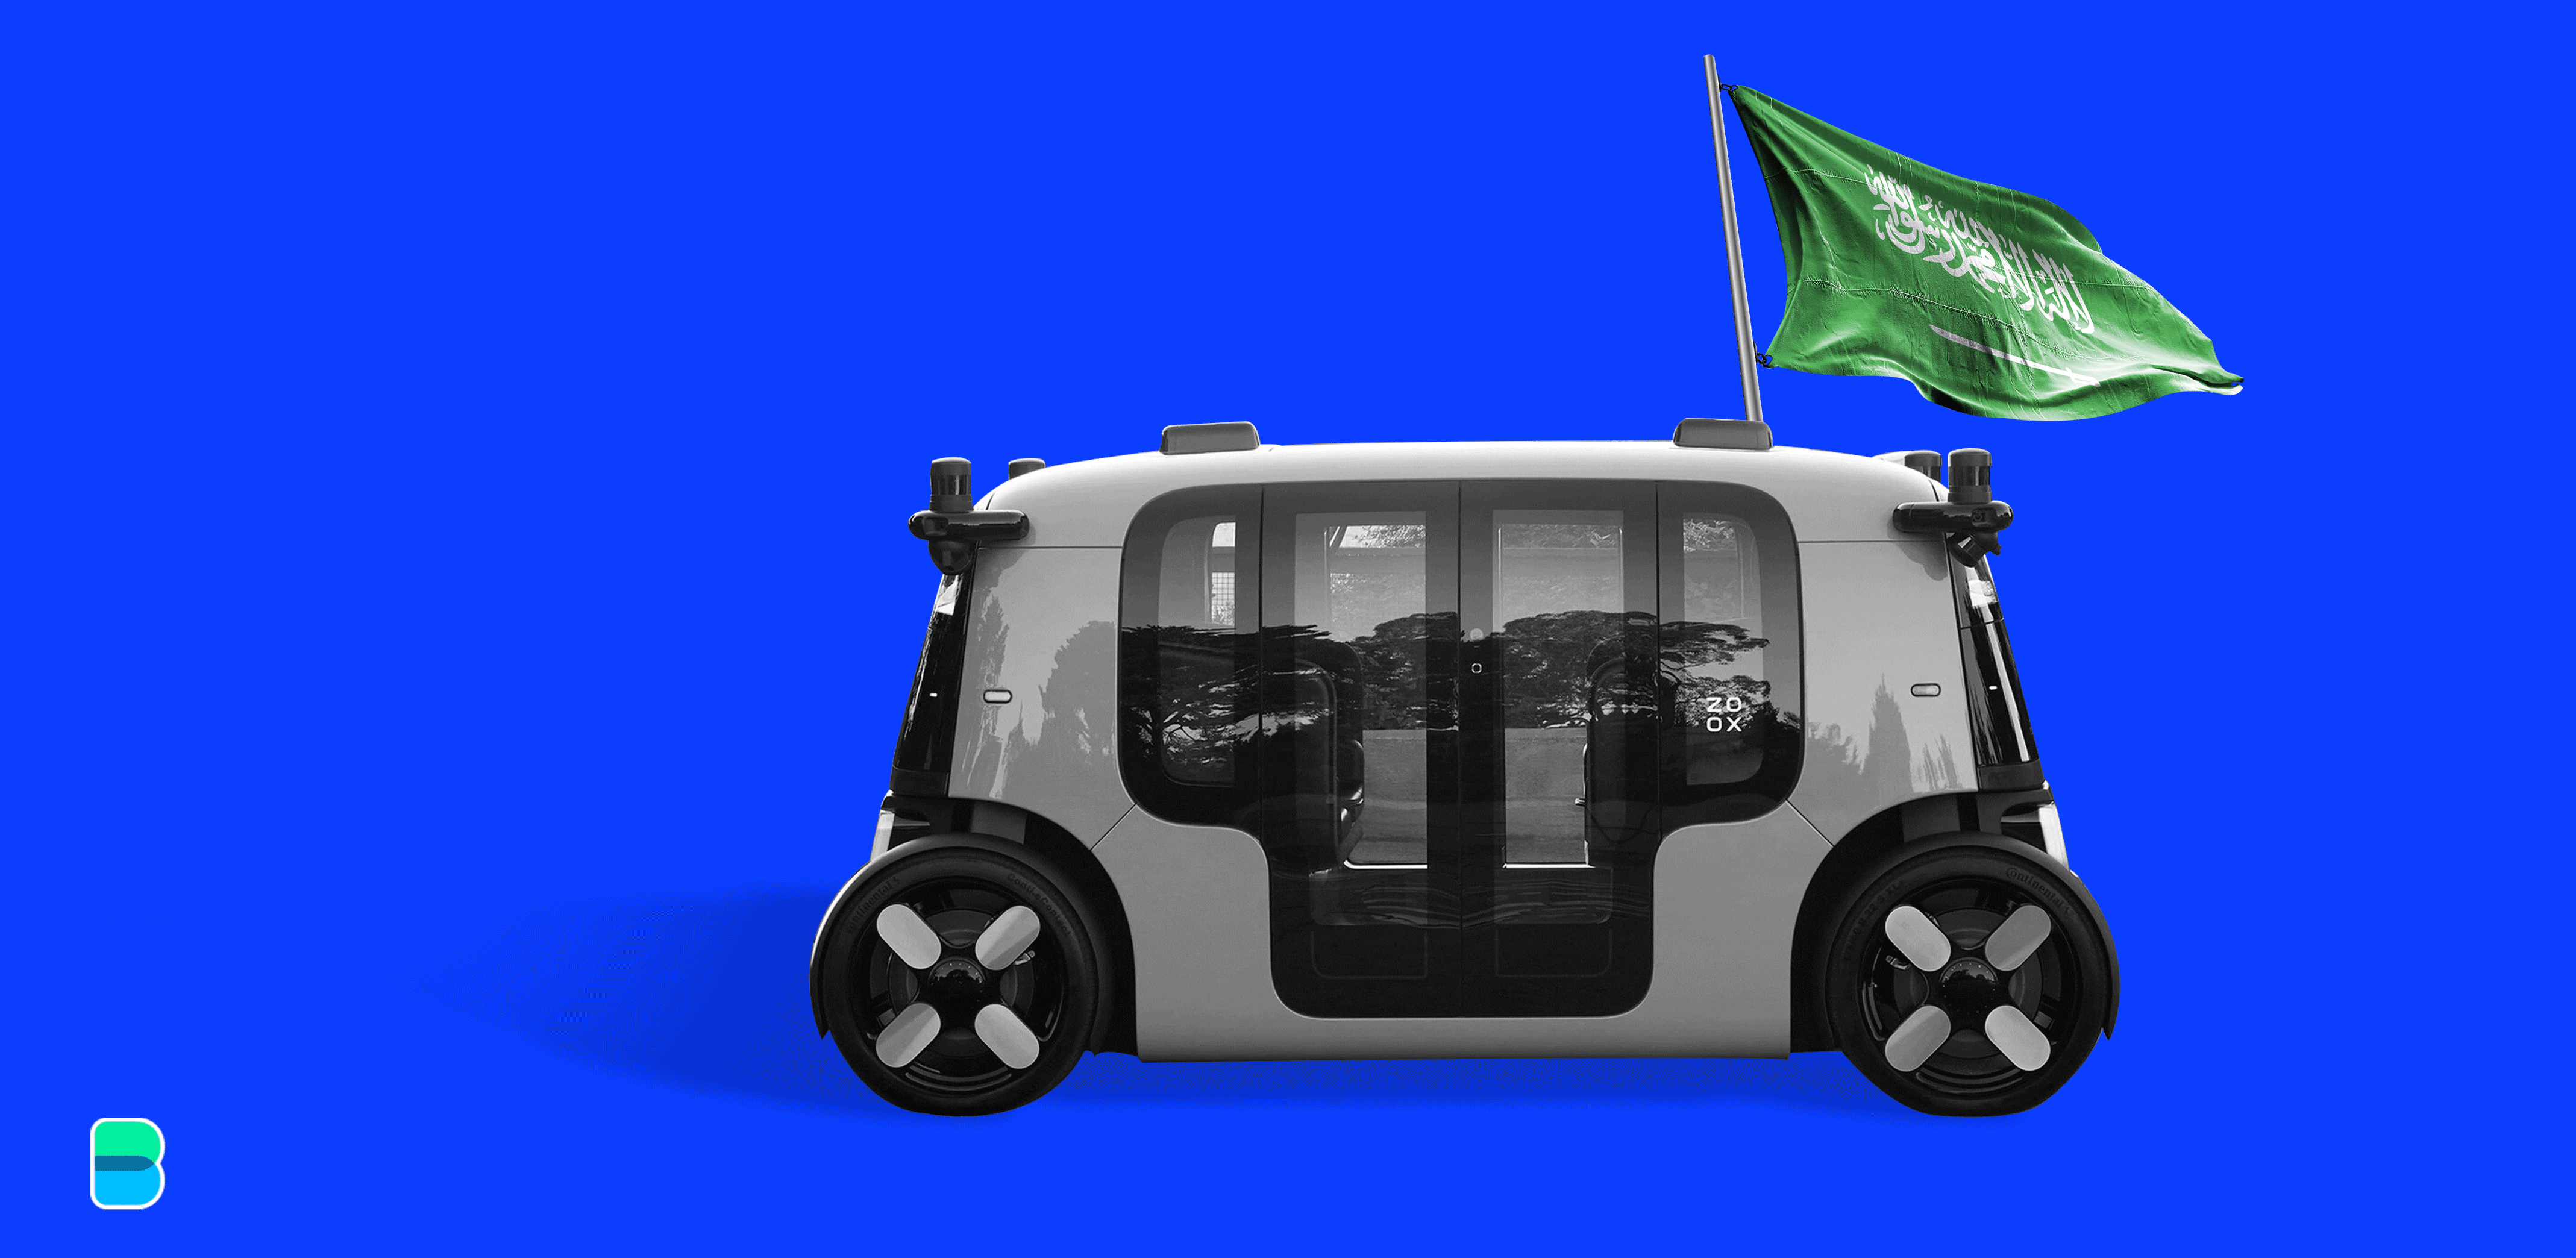 Autonomous driving is coming to Saudi